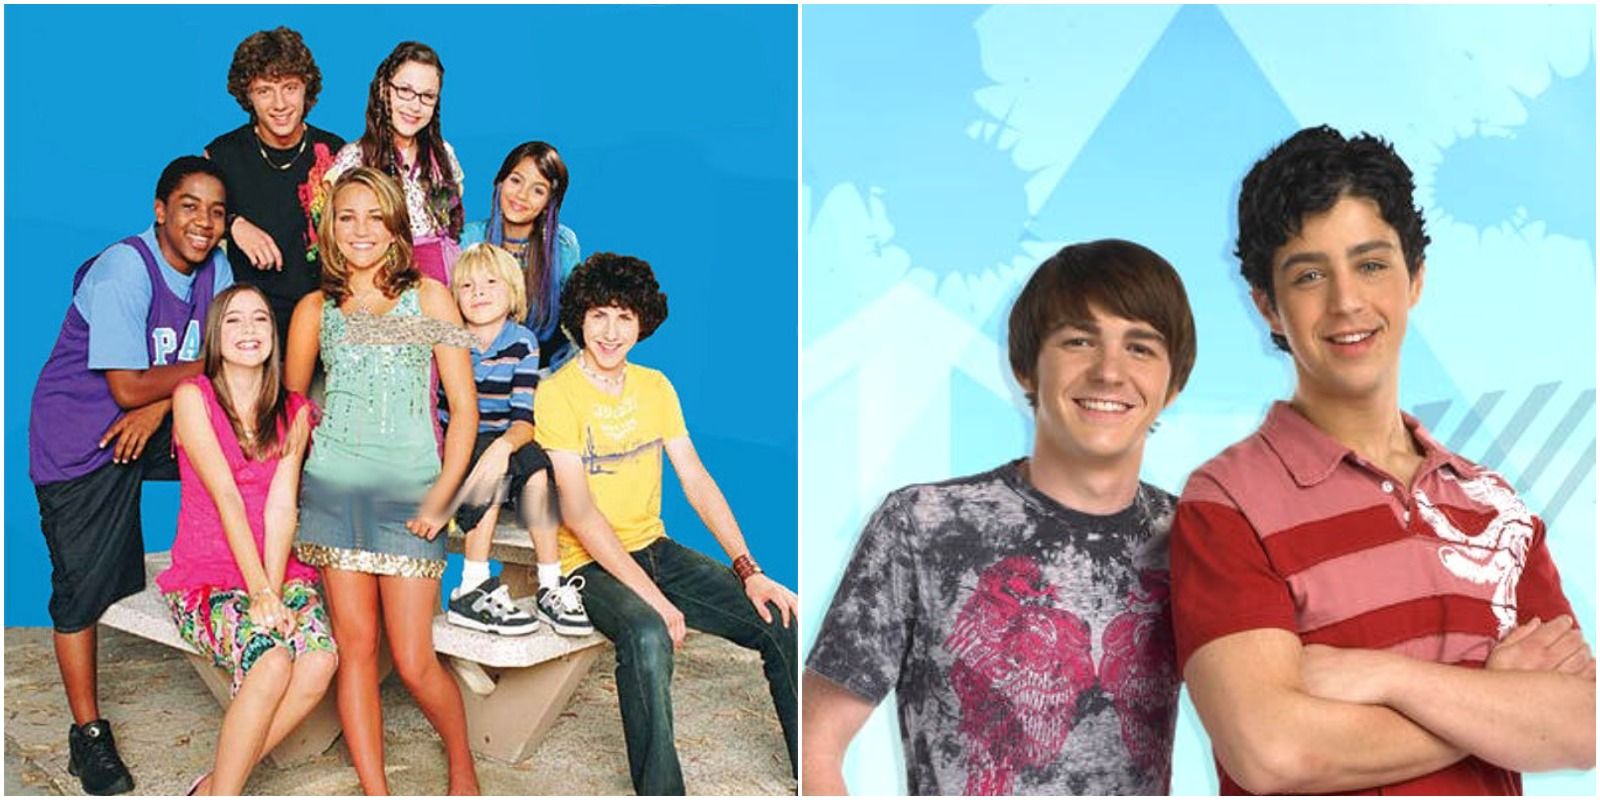 The hit Nickelodeon shows Zoey 101 and Drake & Josh